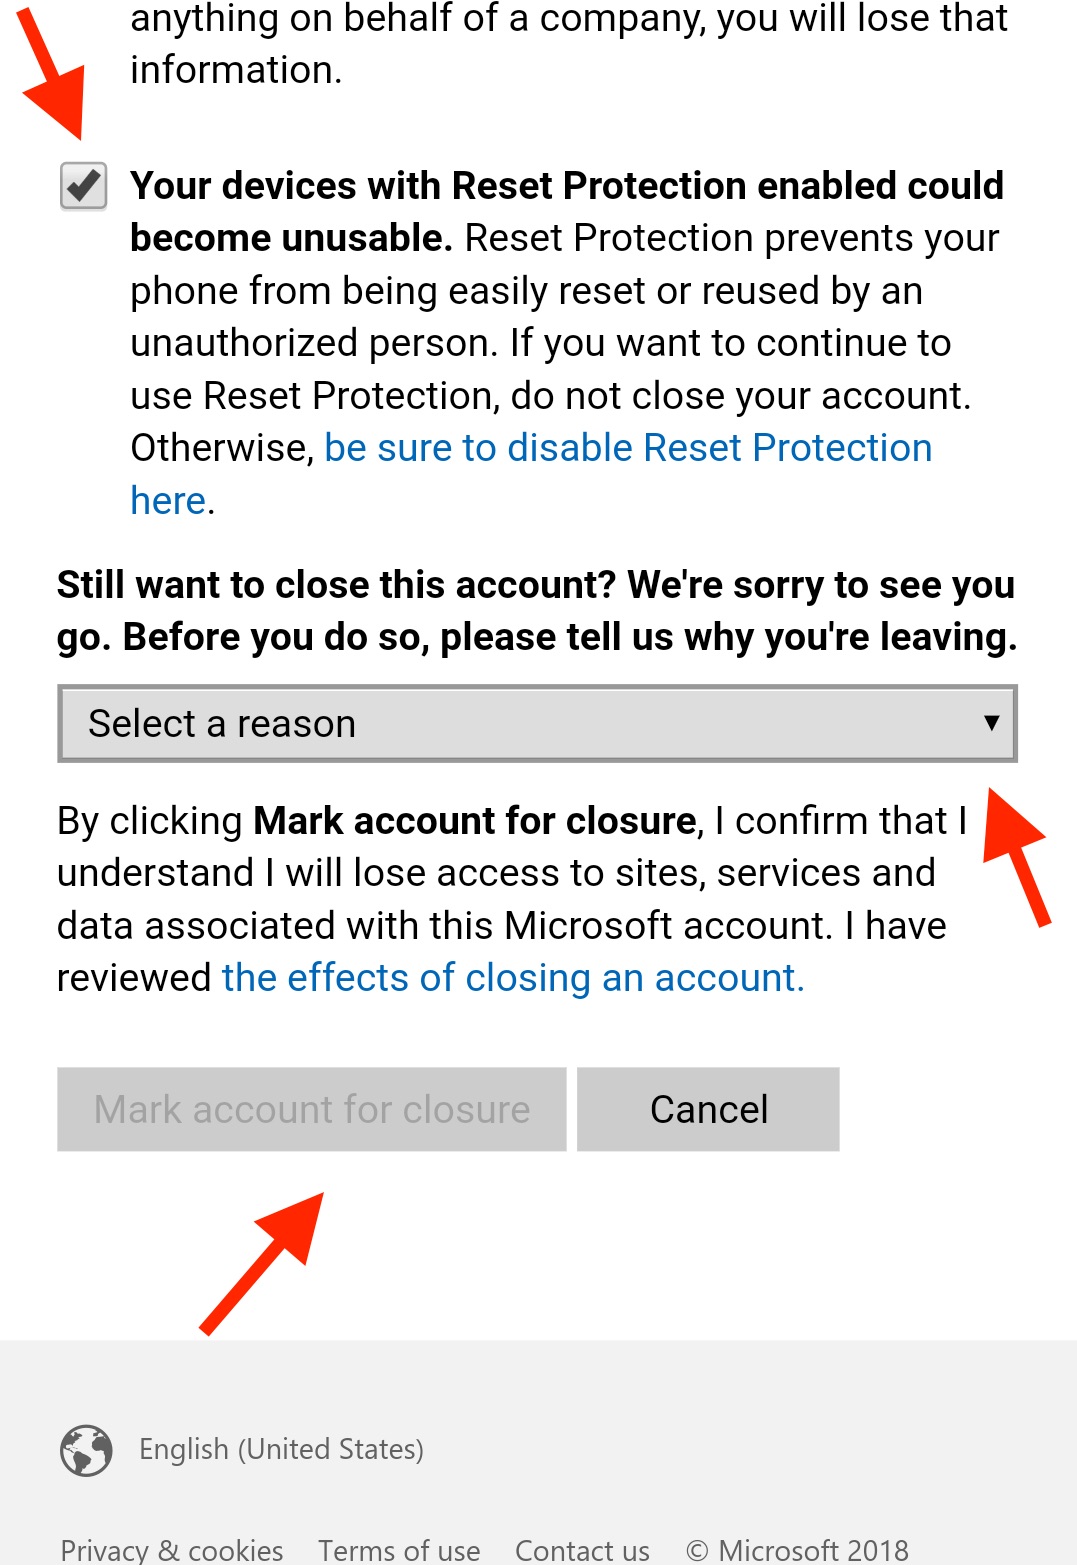 how to delete skype account online